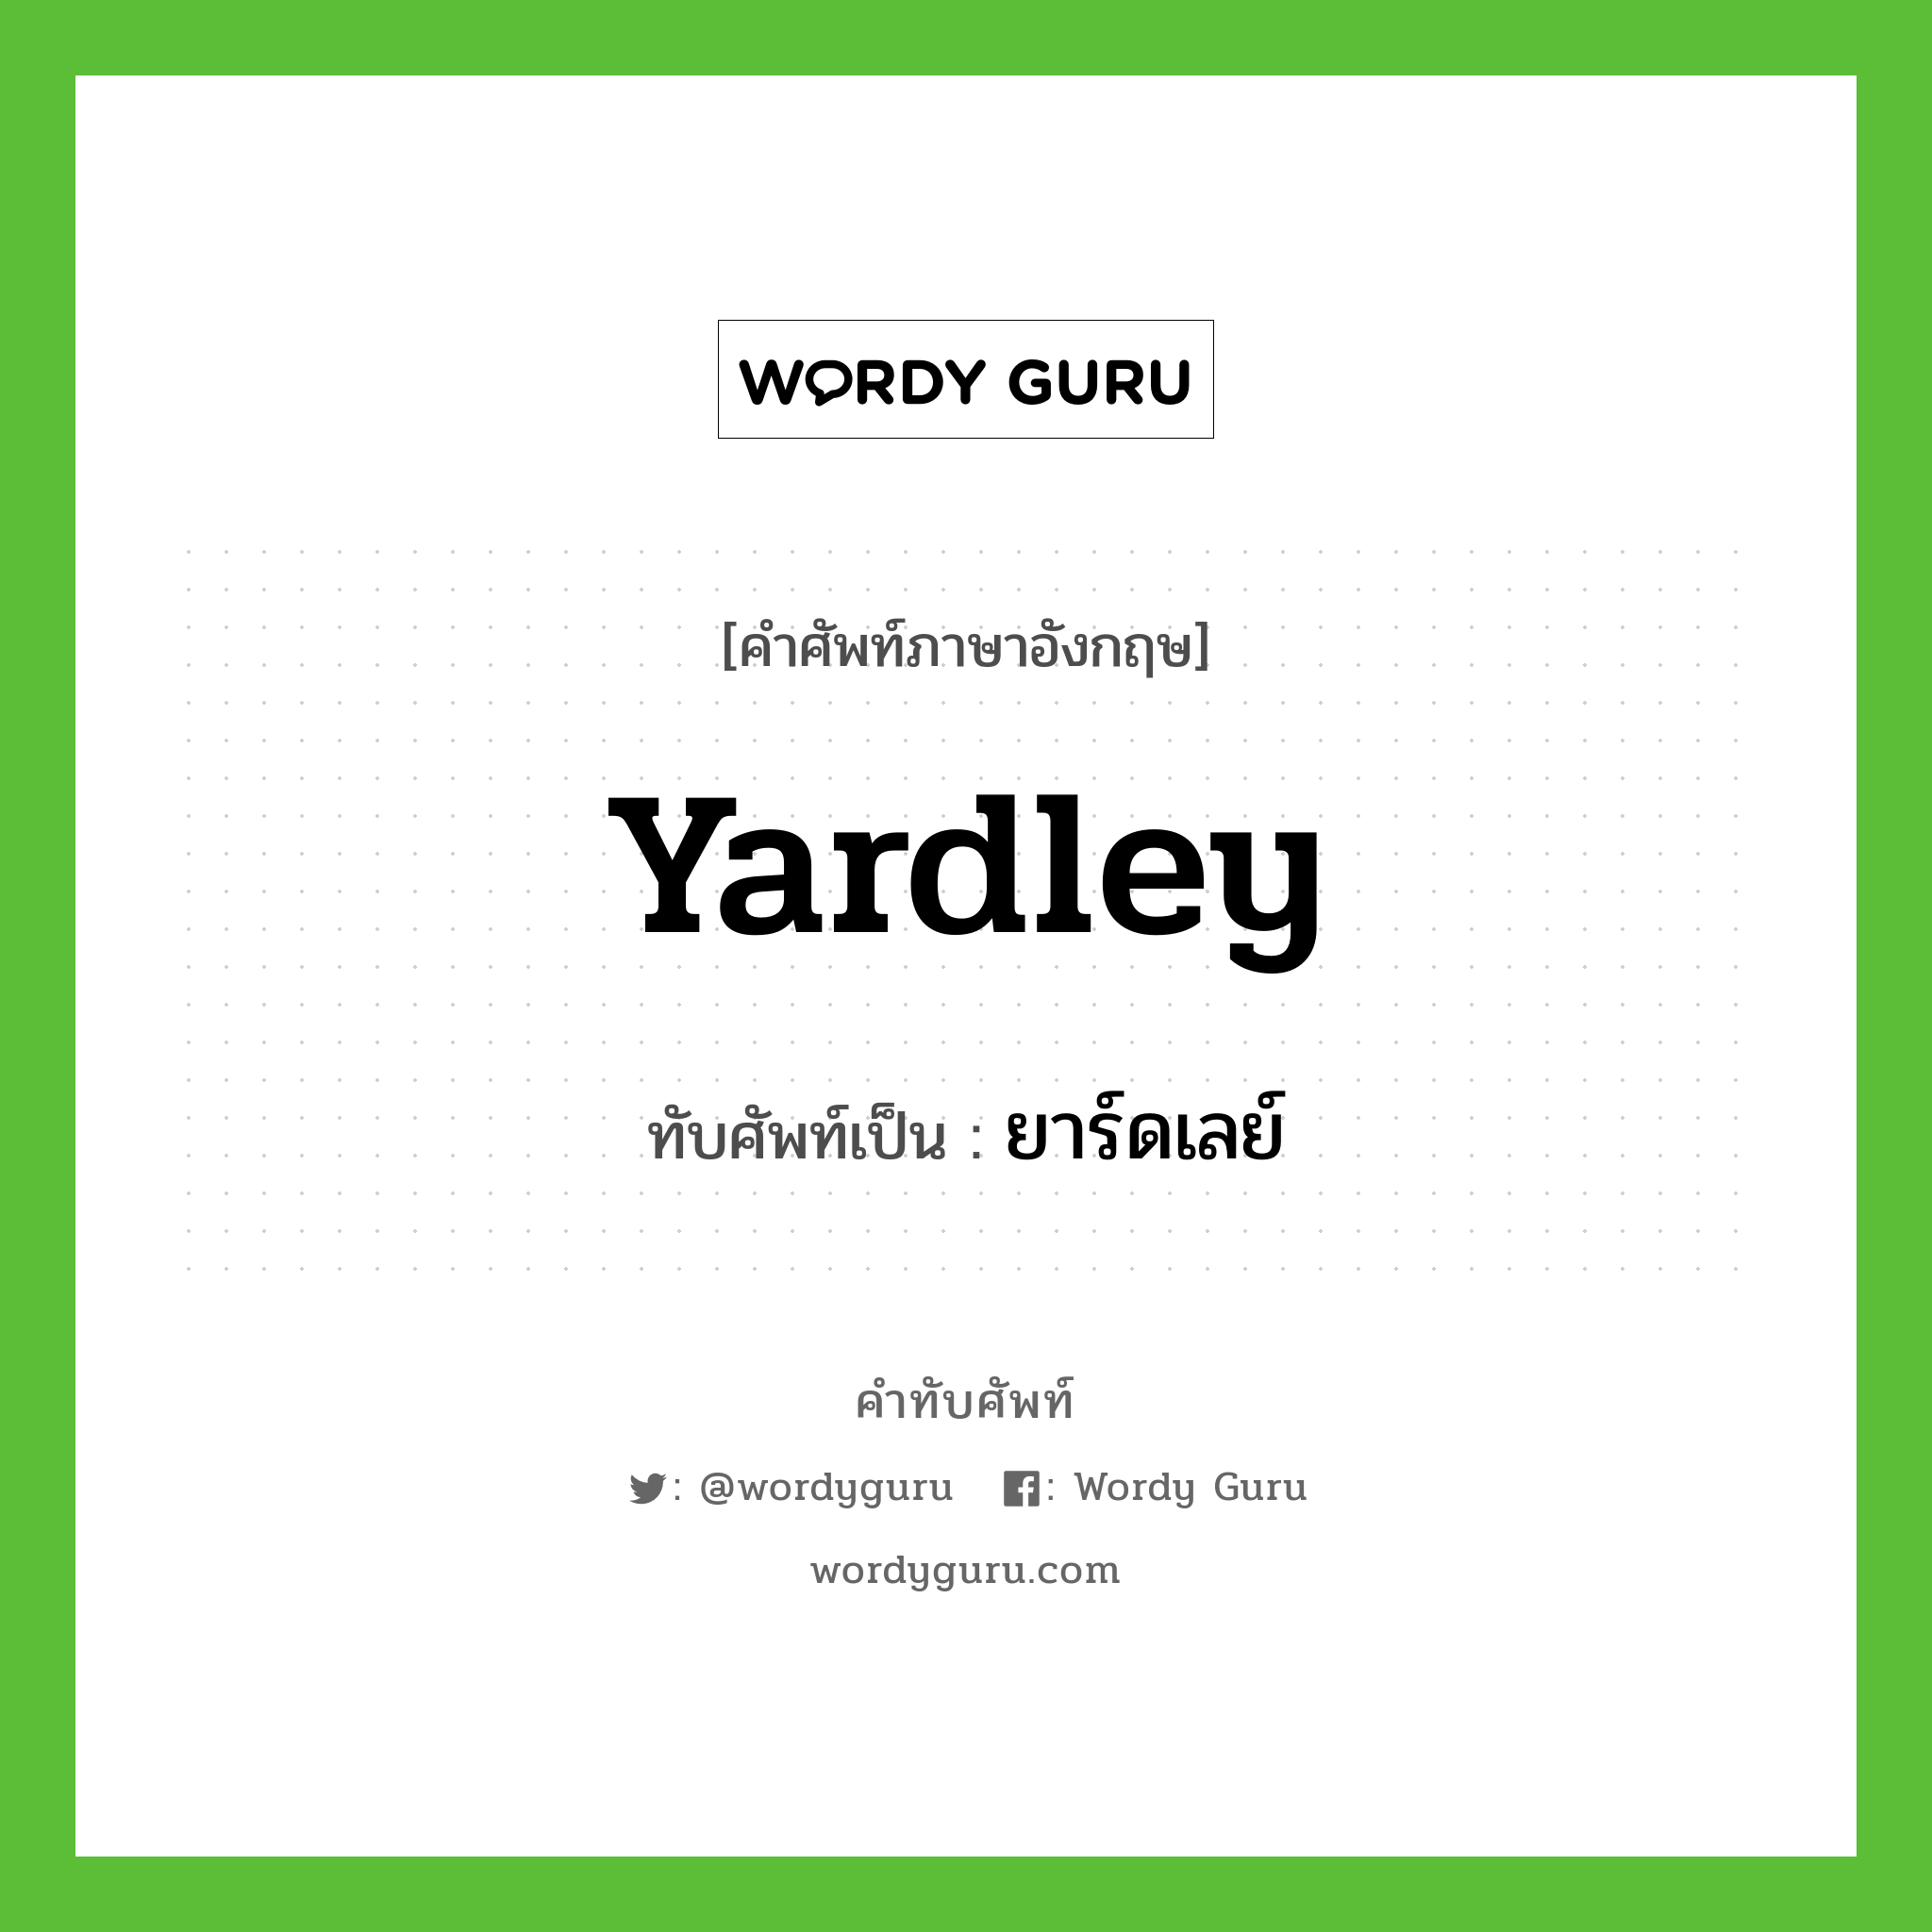 Yardley เขียนเป็นคำไทยว่าอะไร?, คำศัพท์ภาษาอังกฤษ Yardley ทับศัพท์เป็น ยาร์ดเลย์